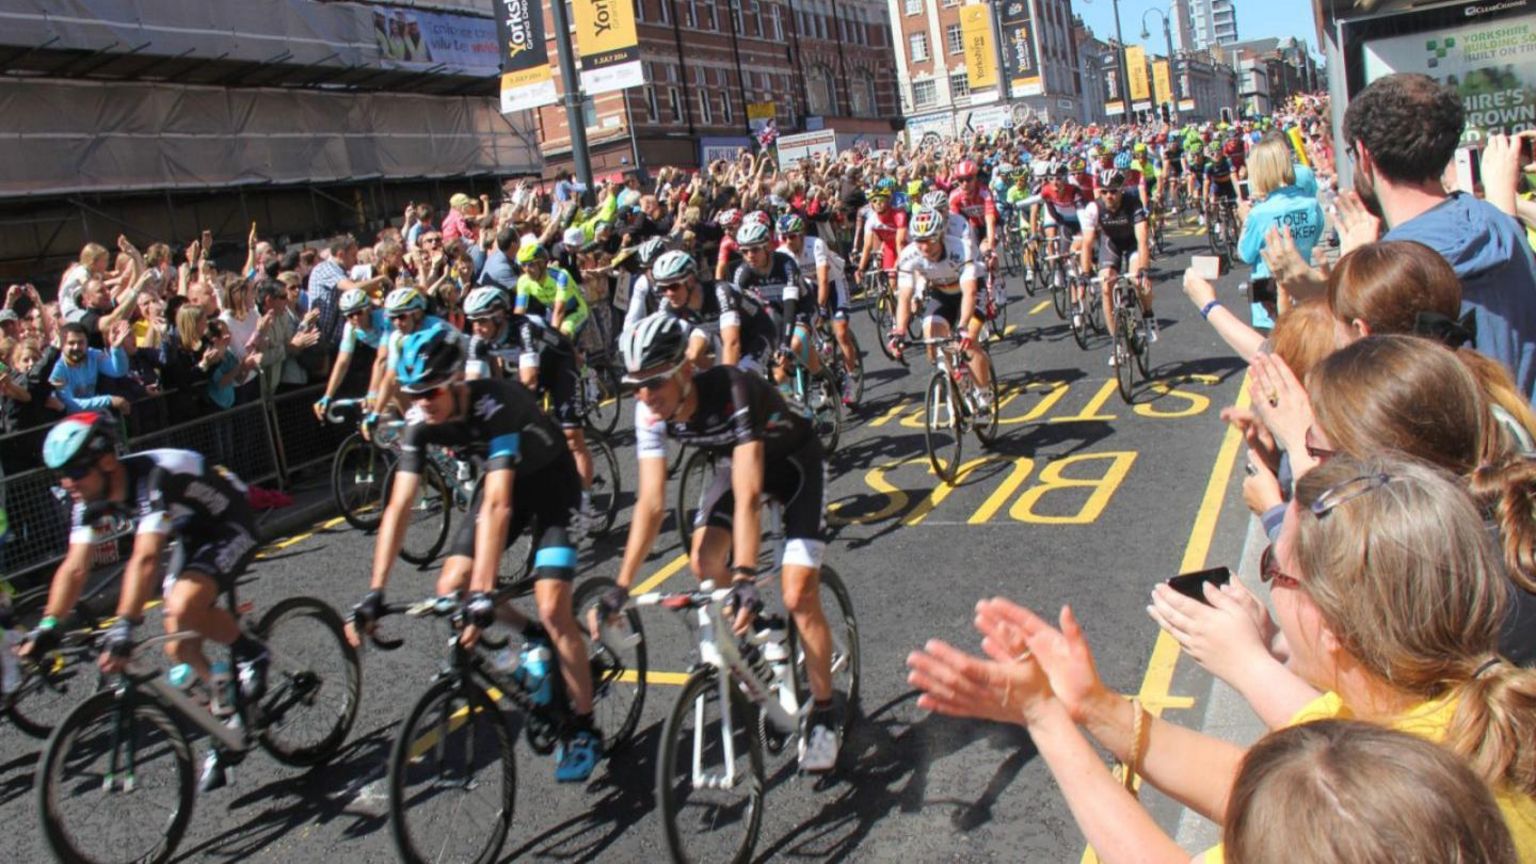 The 2014 Tour de France starts in Leeds